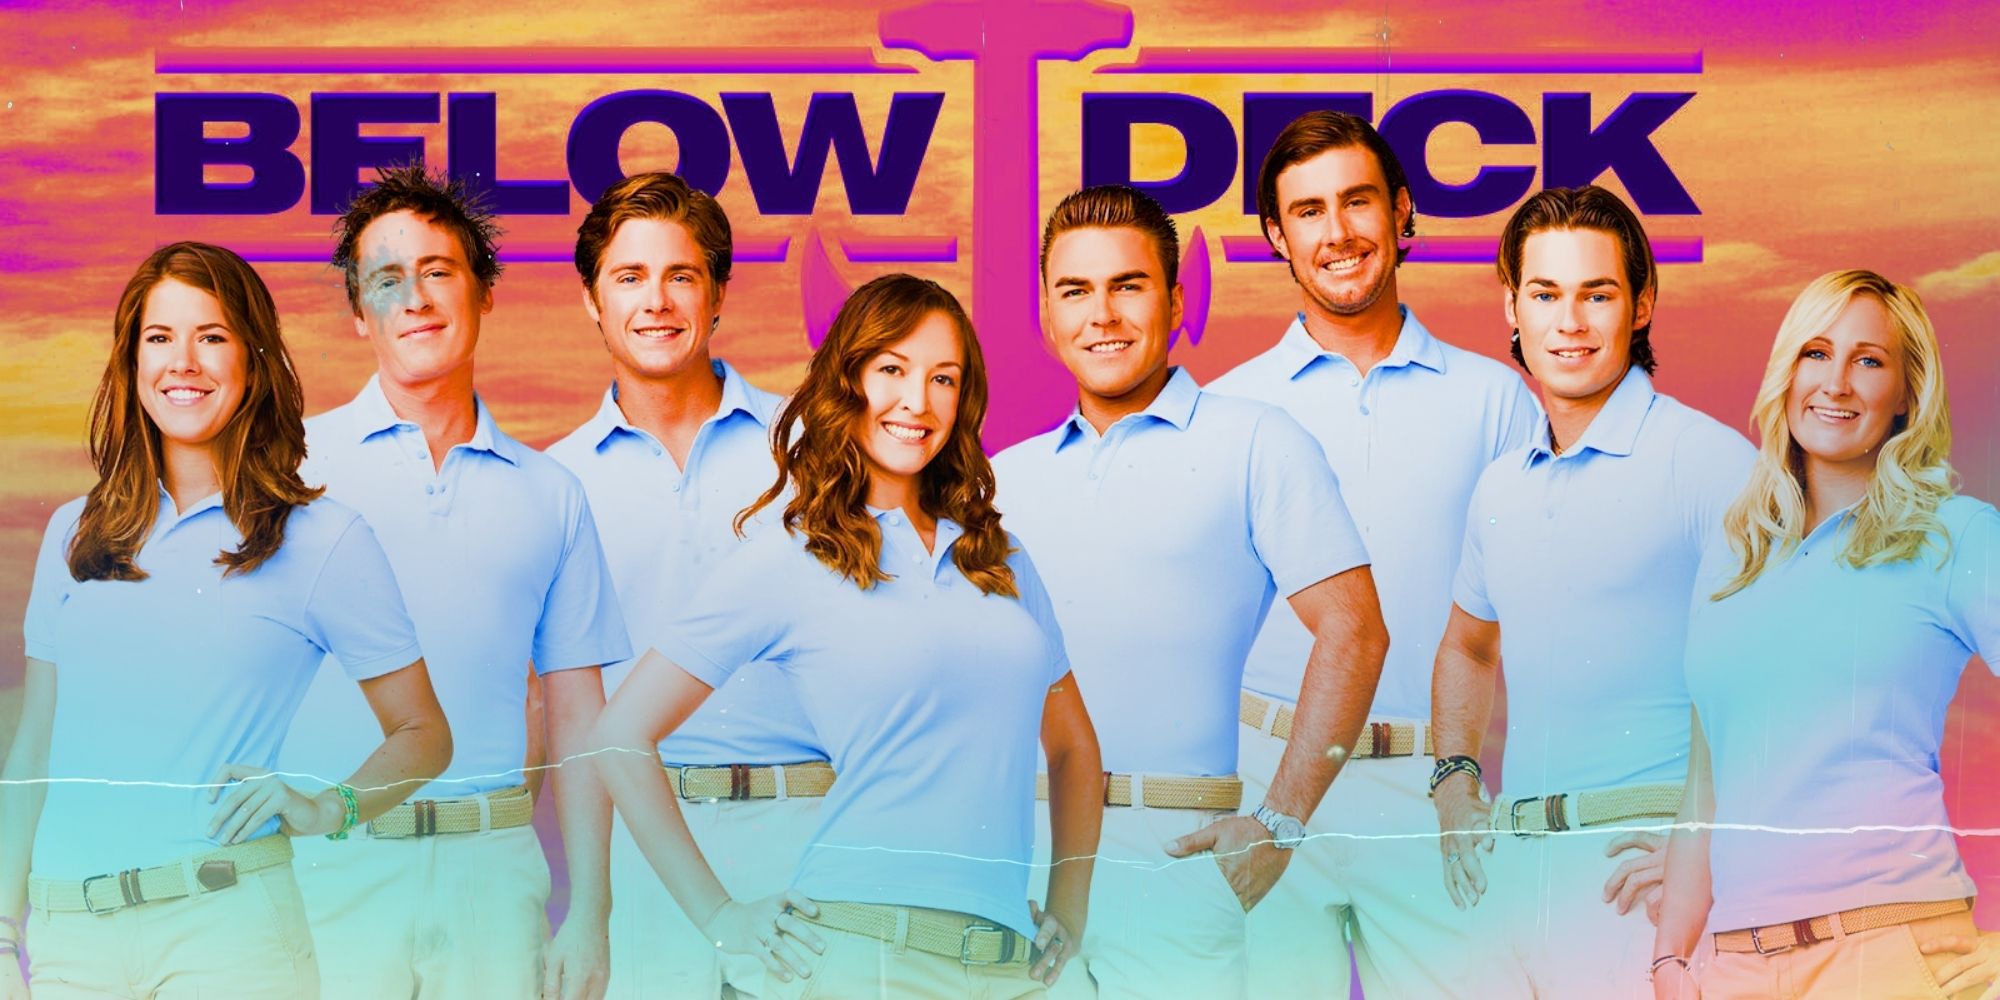 Below Deck season 1 cast promo shot